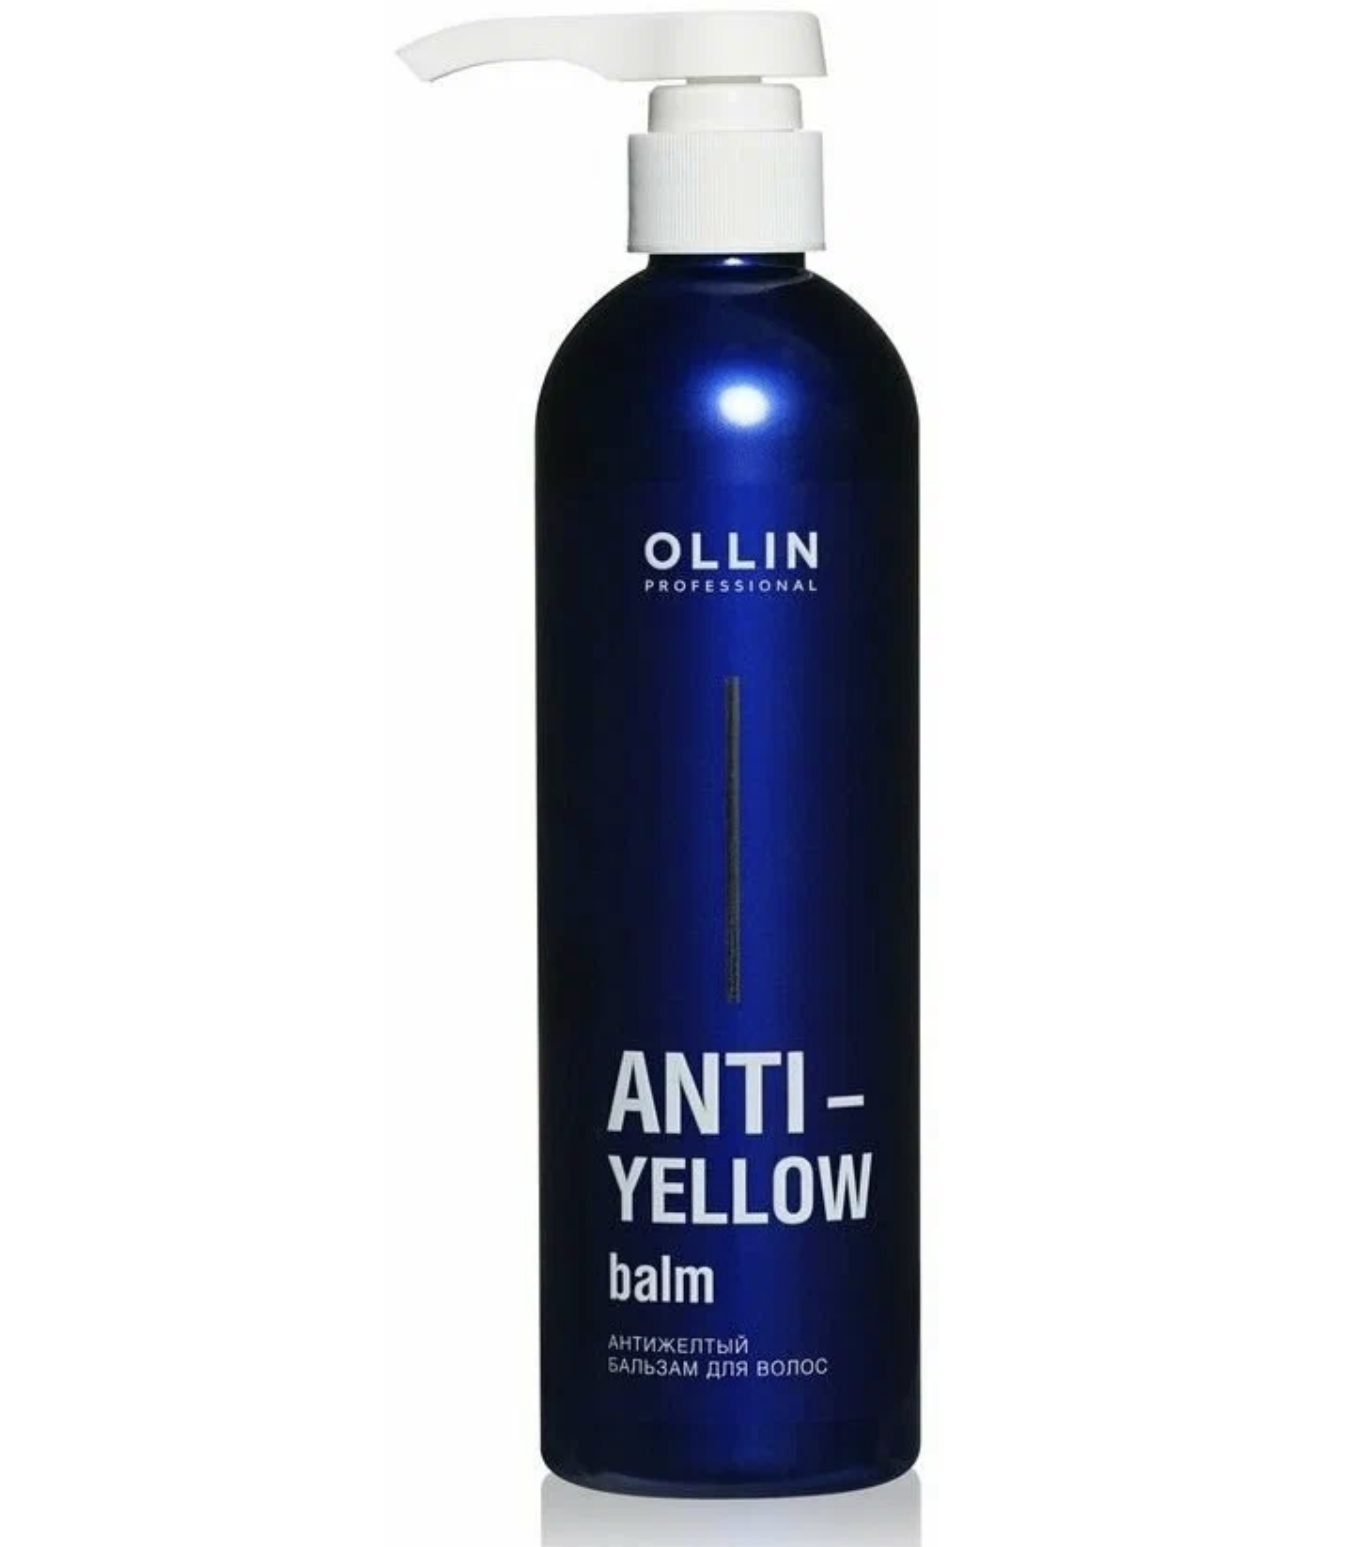 Олин бальзам. Ollin Anti Yellow шампунь 250мл. Олин бальзам для волос. Бальзам Ollin professional.